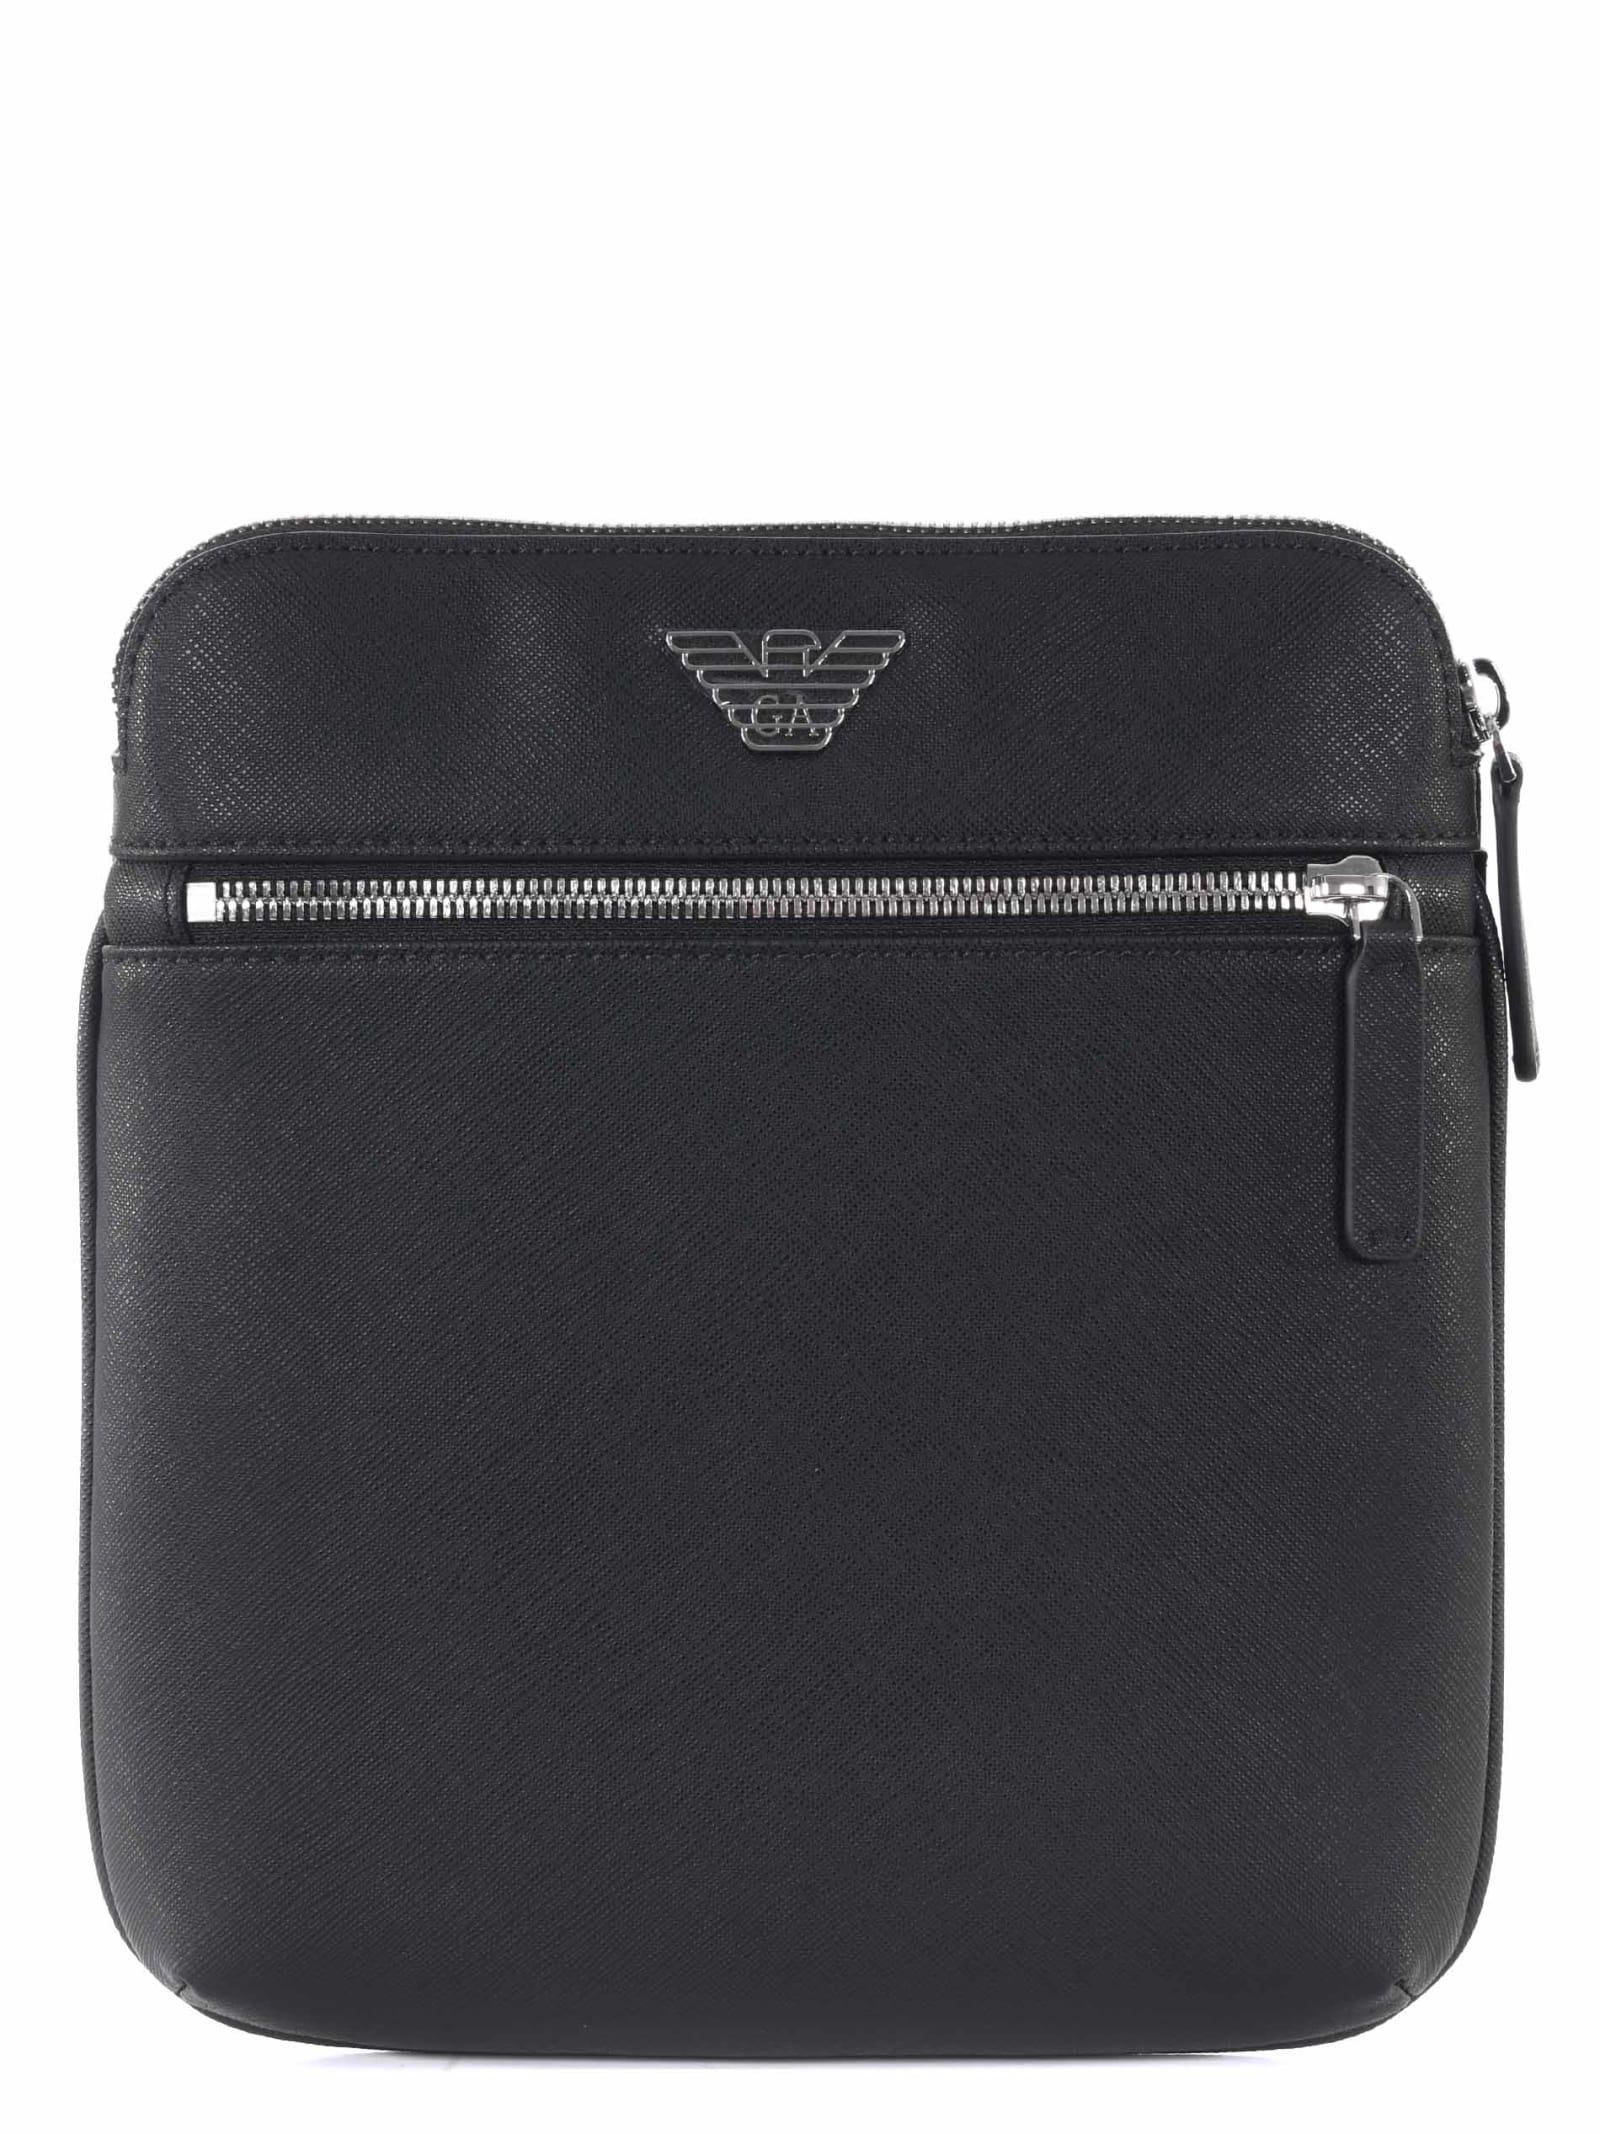 Emporio Armani Shoulder Bag In Faux Leather